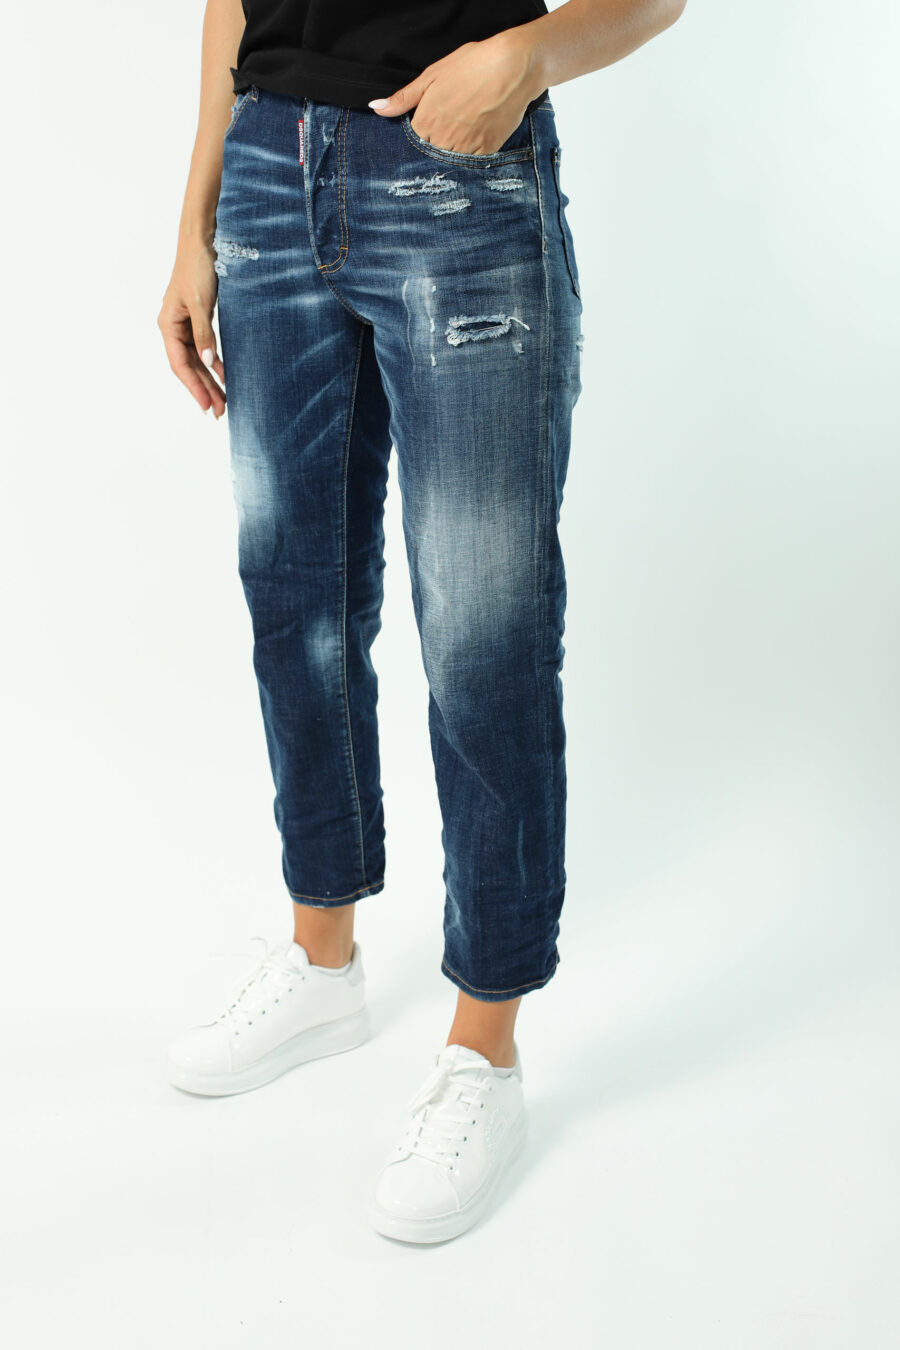 Boston Jean" blue jeans - Photos 2984